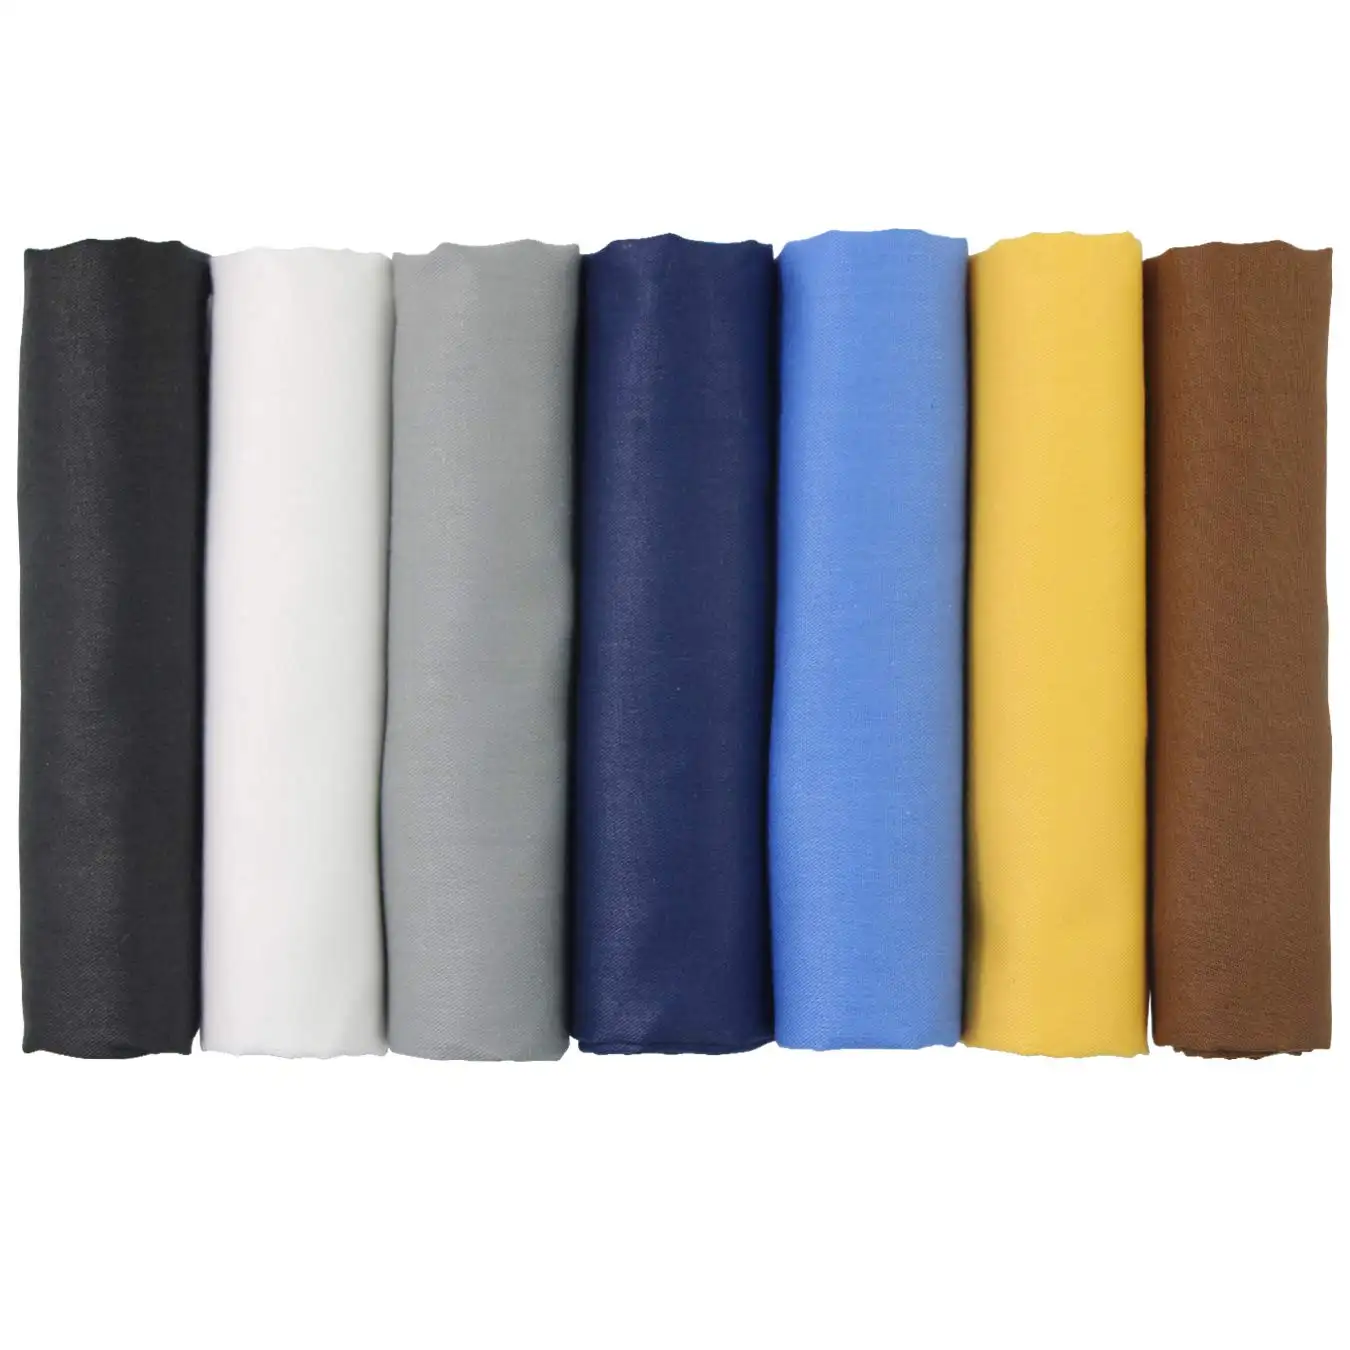 Kain kaus katun poliester tenun TC warna-warni kustom untuk pria kaus kain produsen kain poliester/kain katun